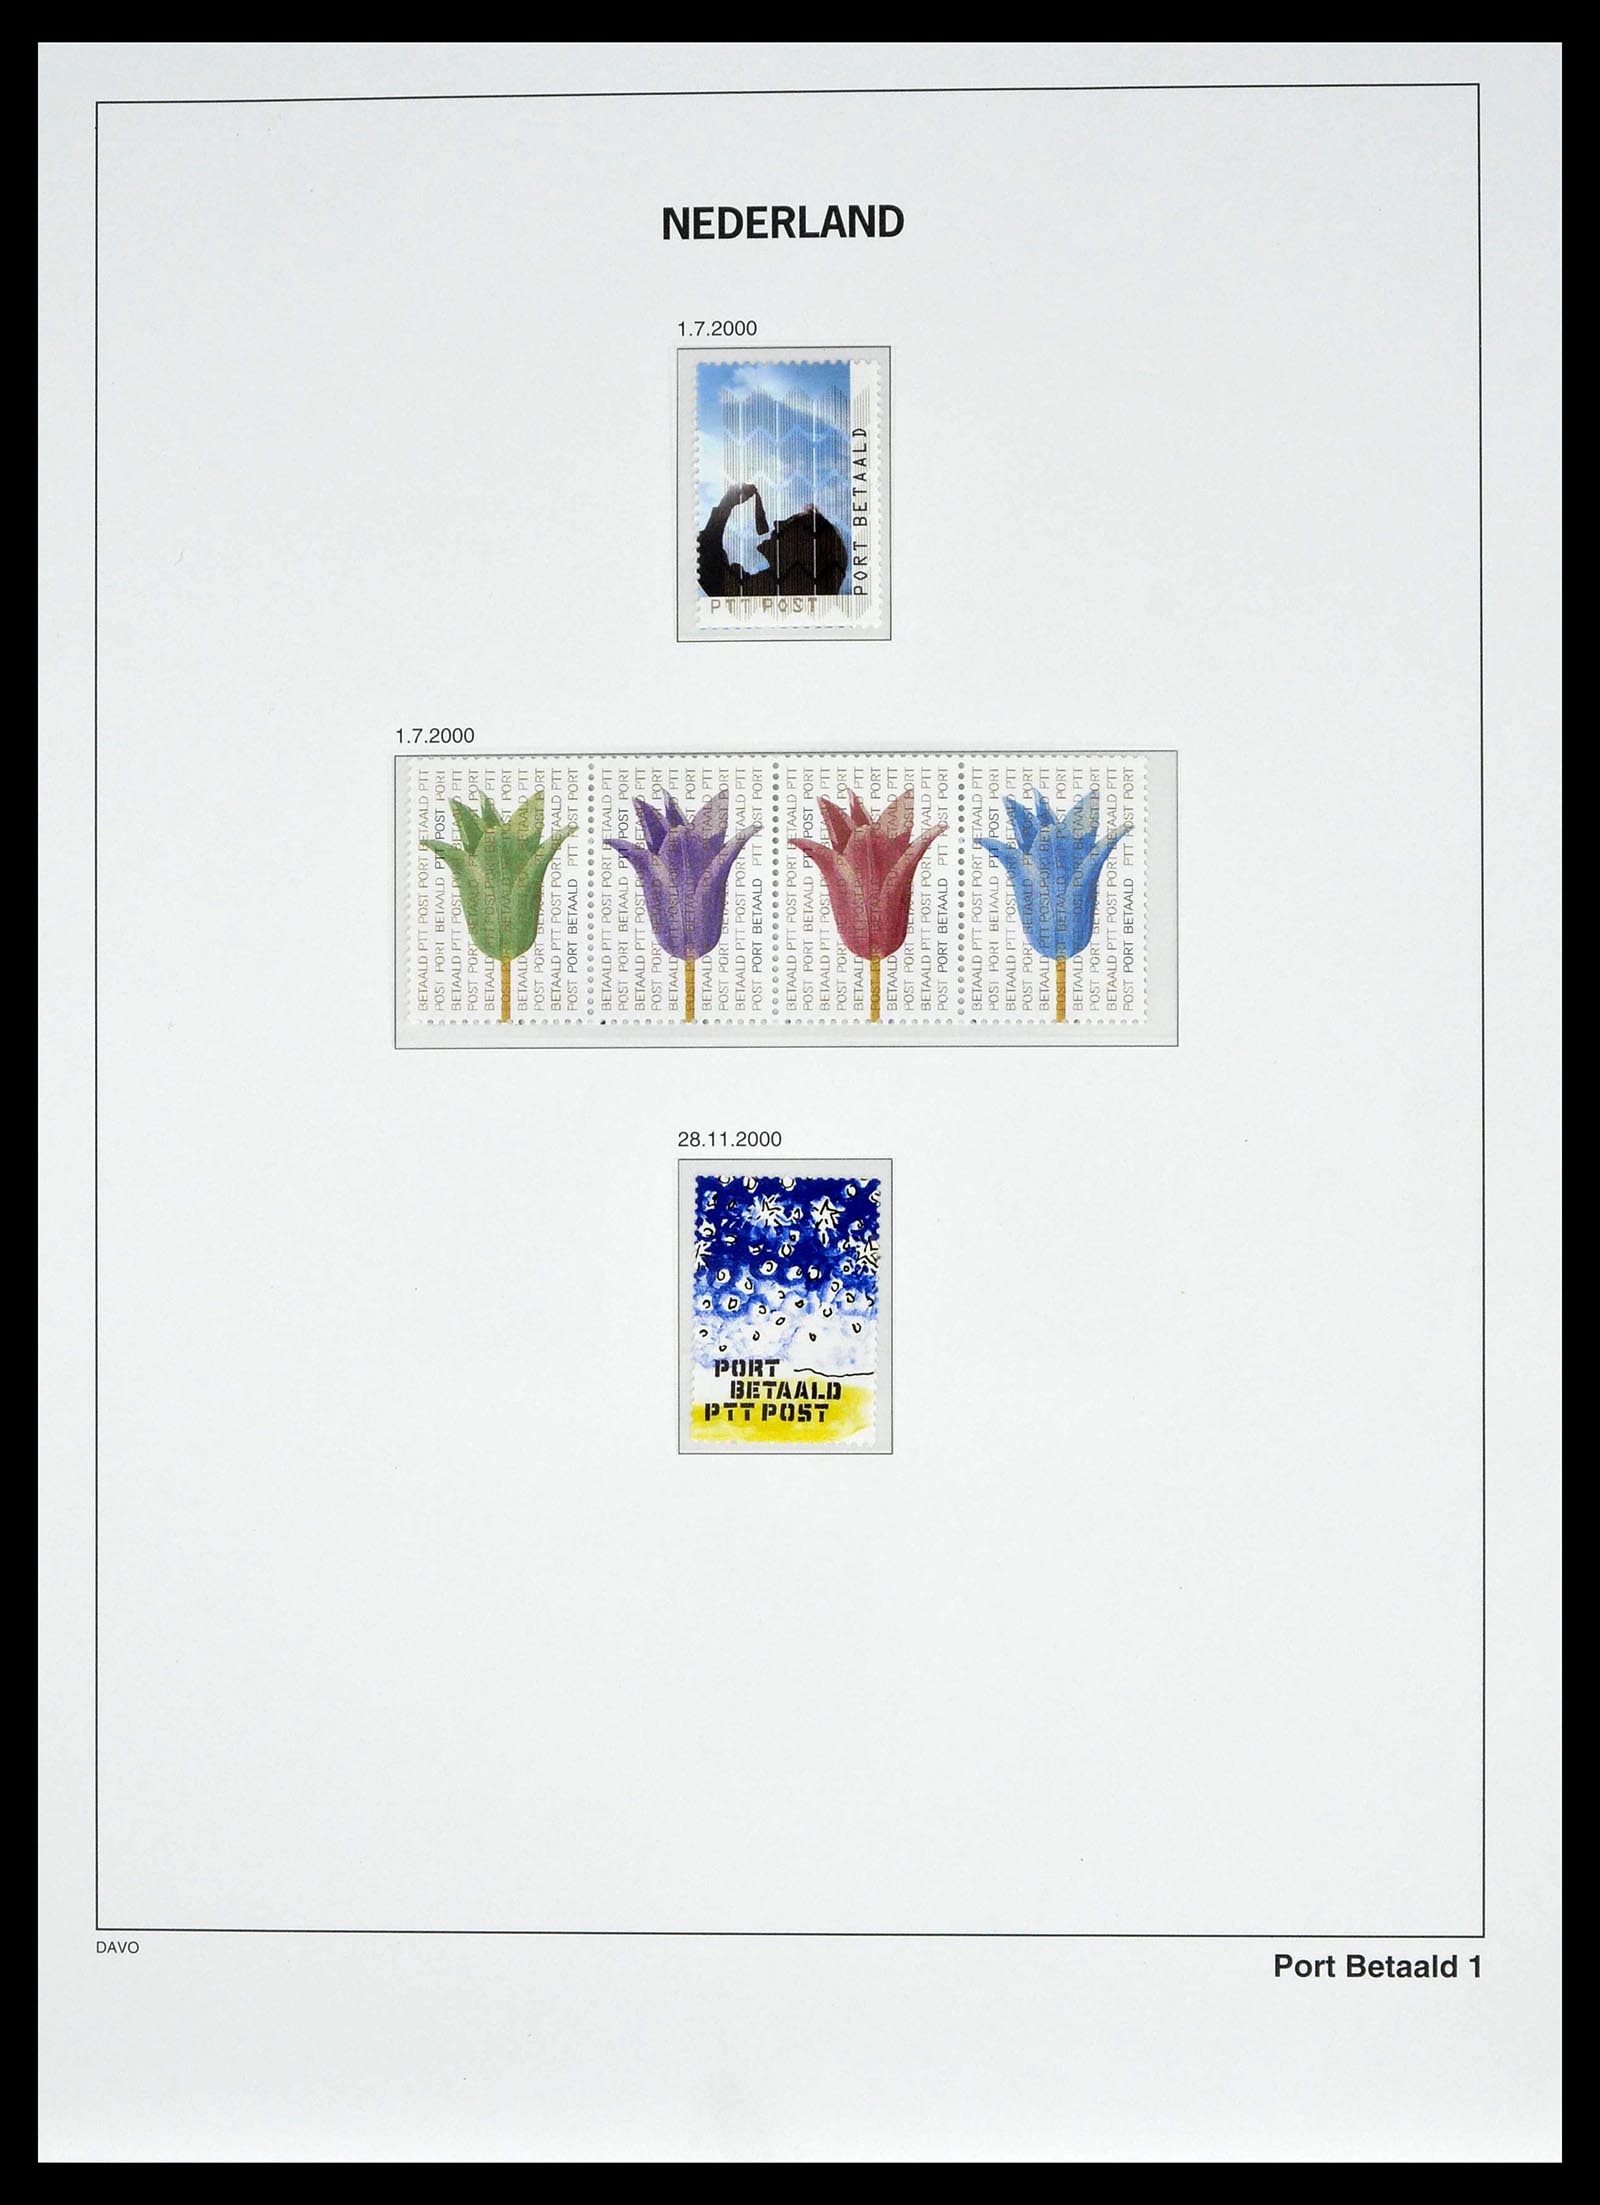 39362 0051 - Stamp collection 39362 Netherlands stamp booklets 1964-2003.